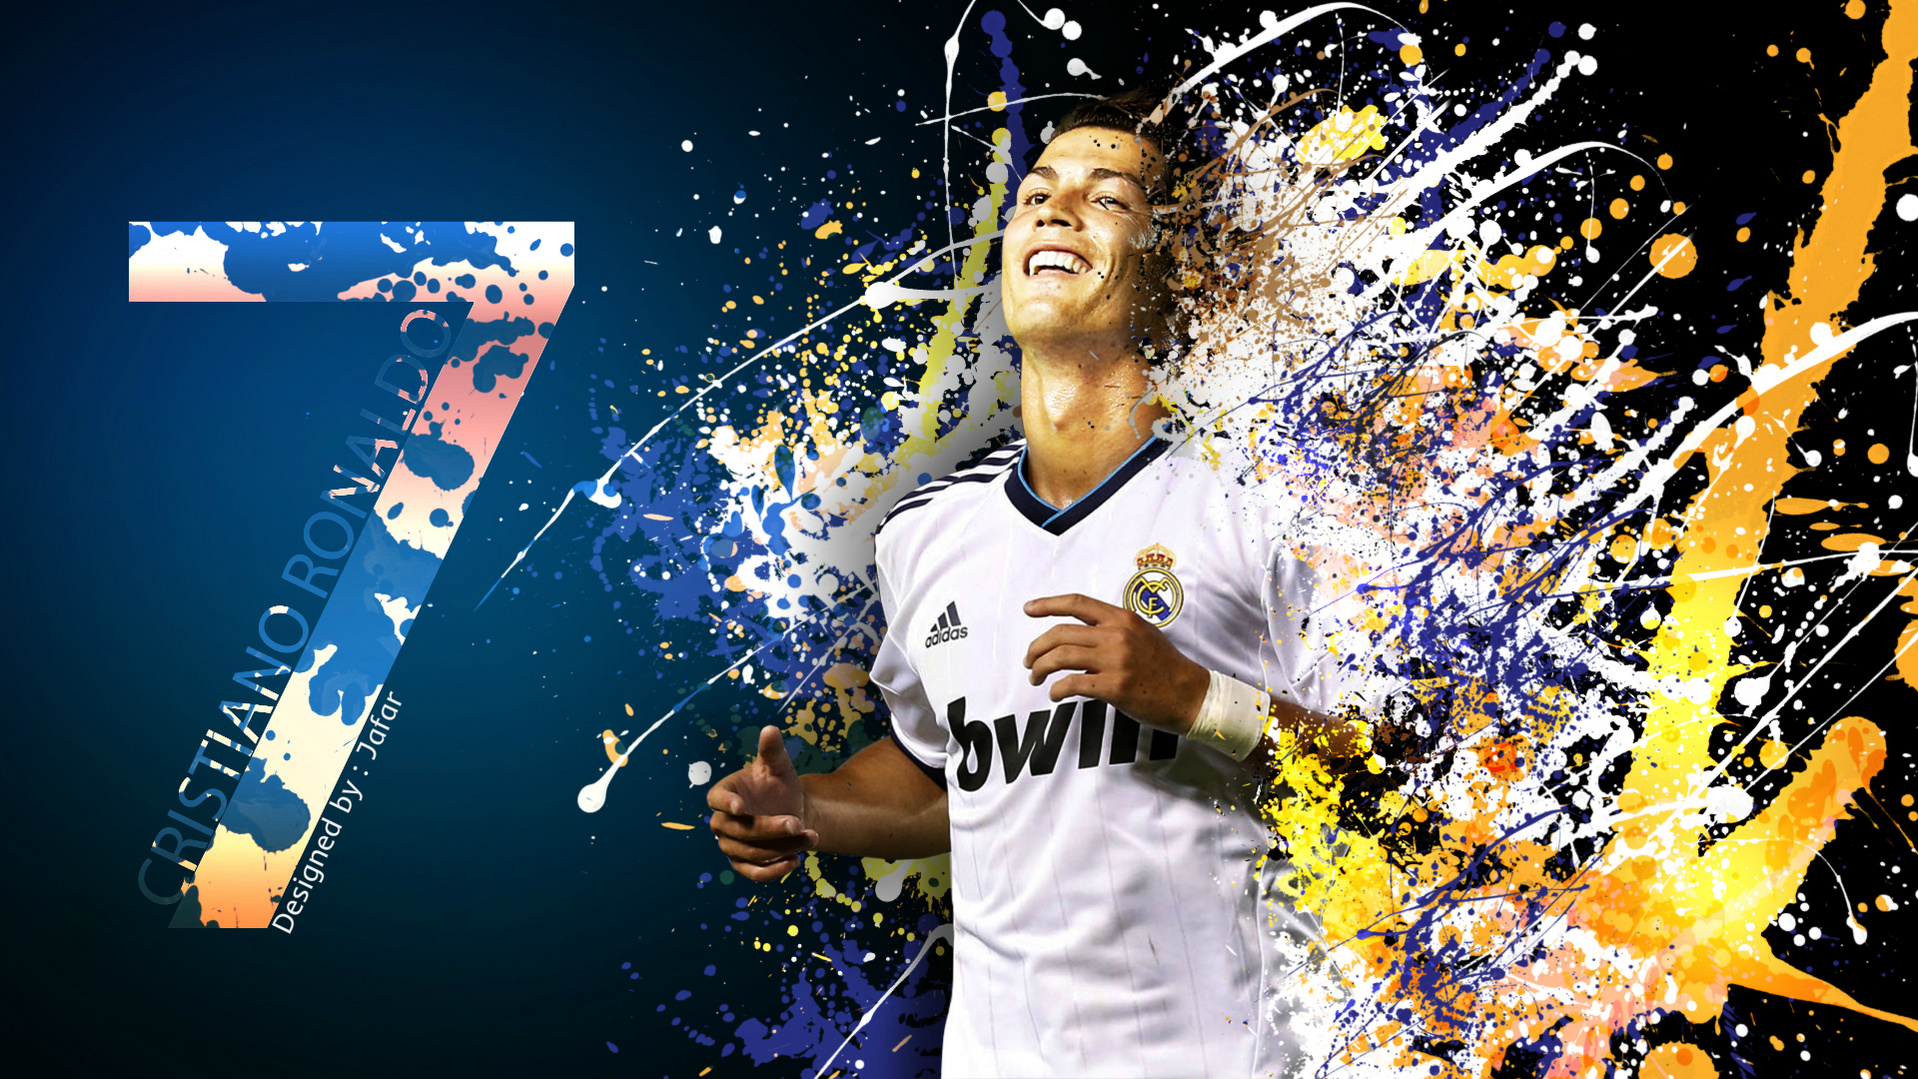 Free Download Cristiano Ronaldo Number Seven Wallpaper Image